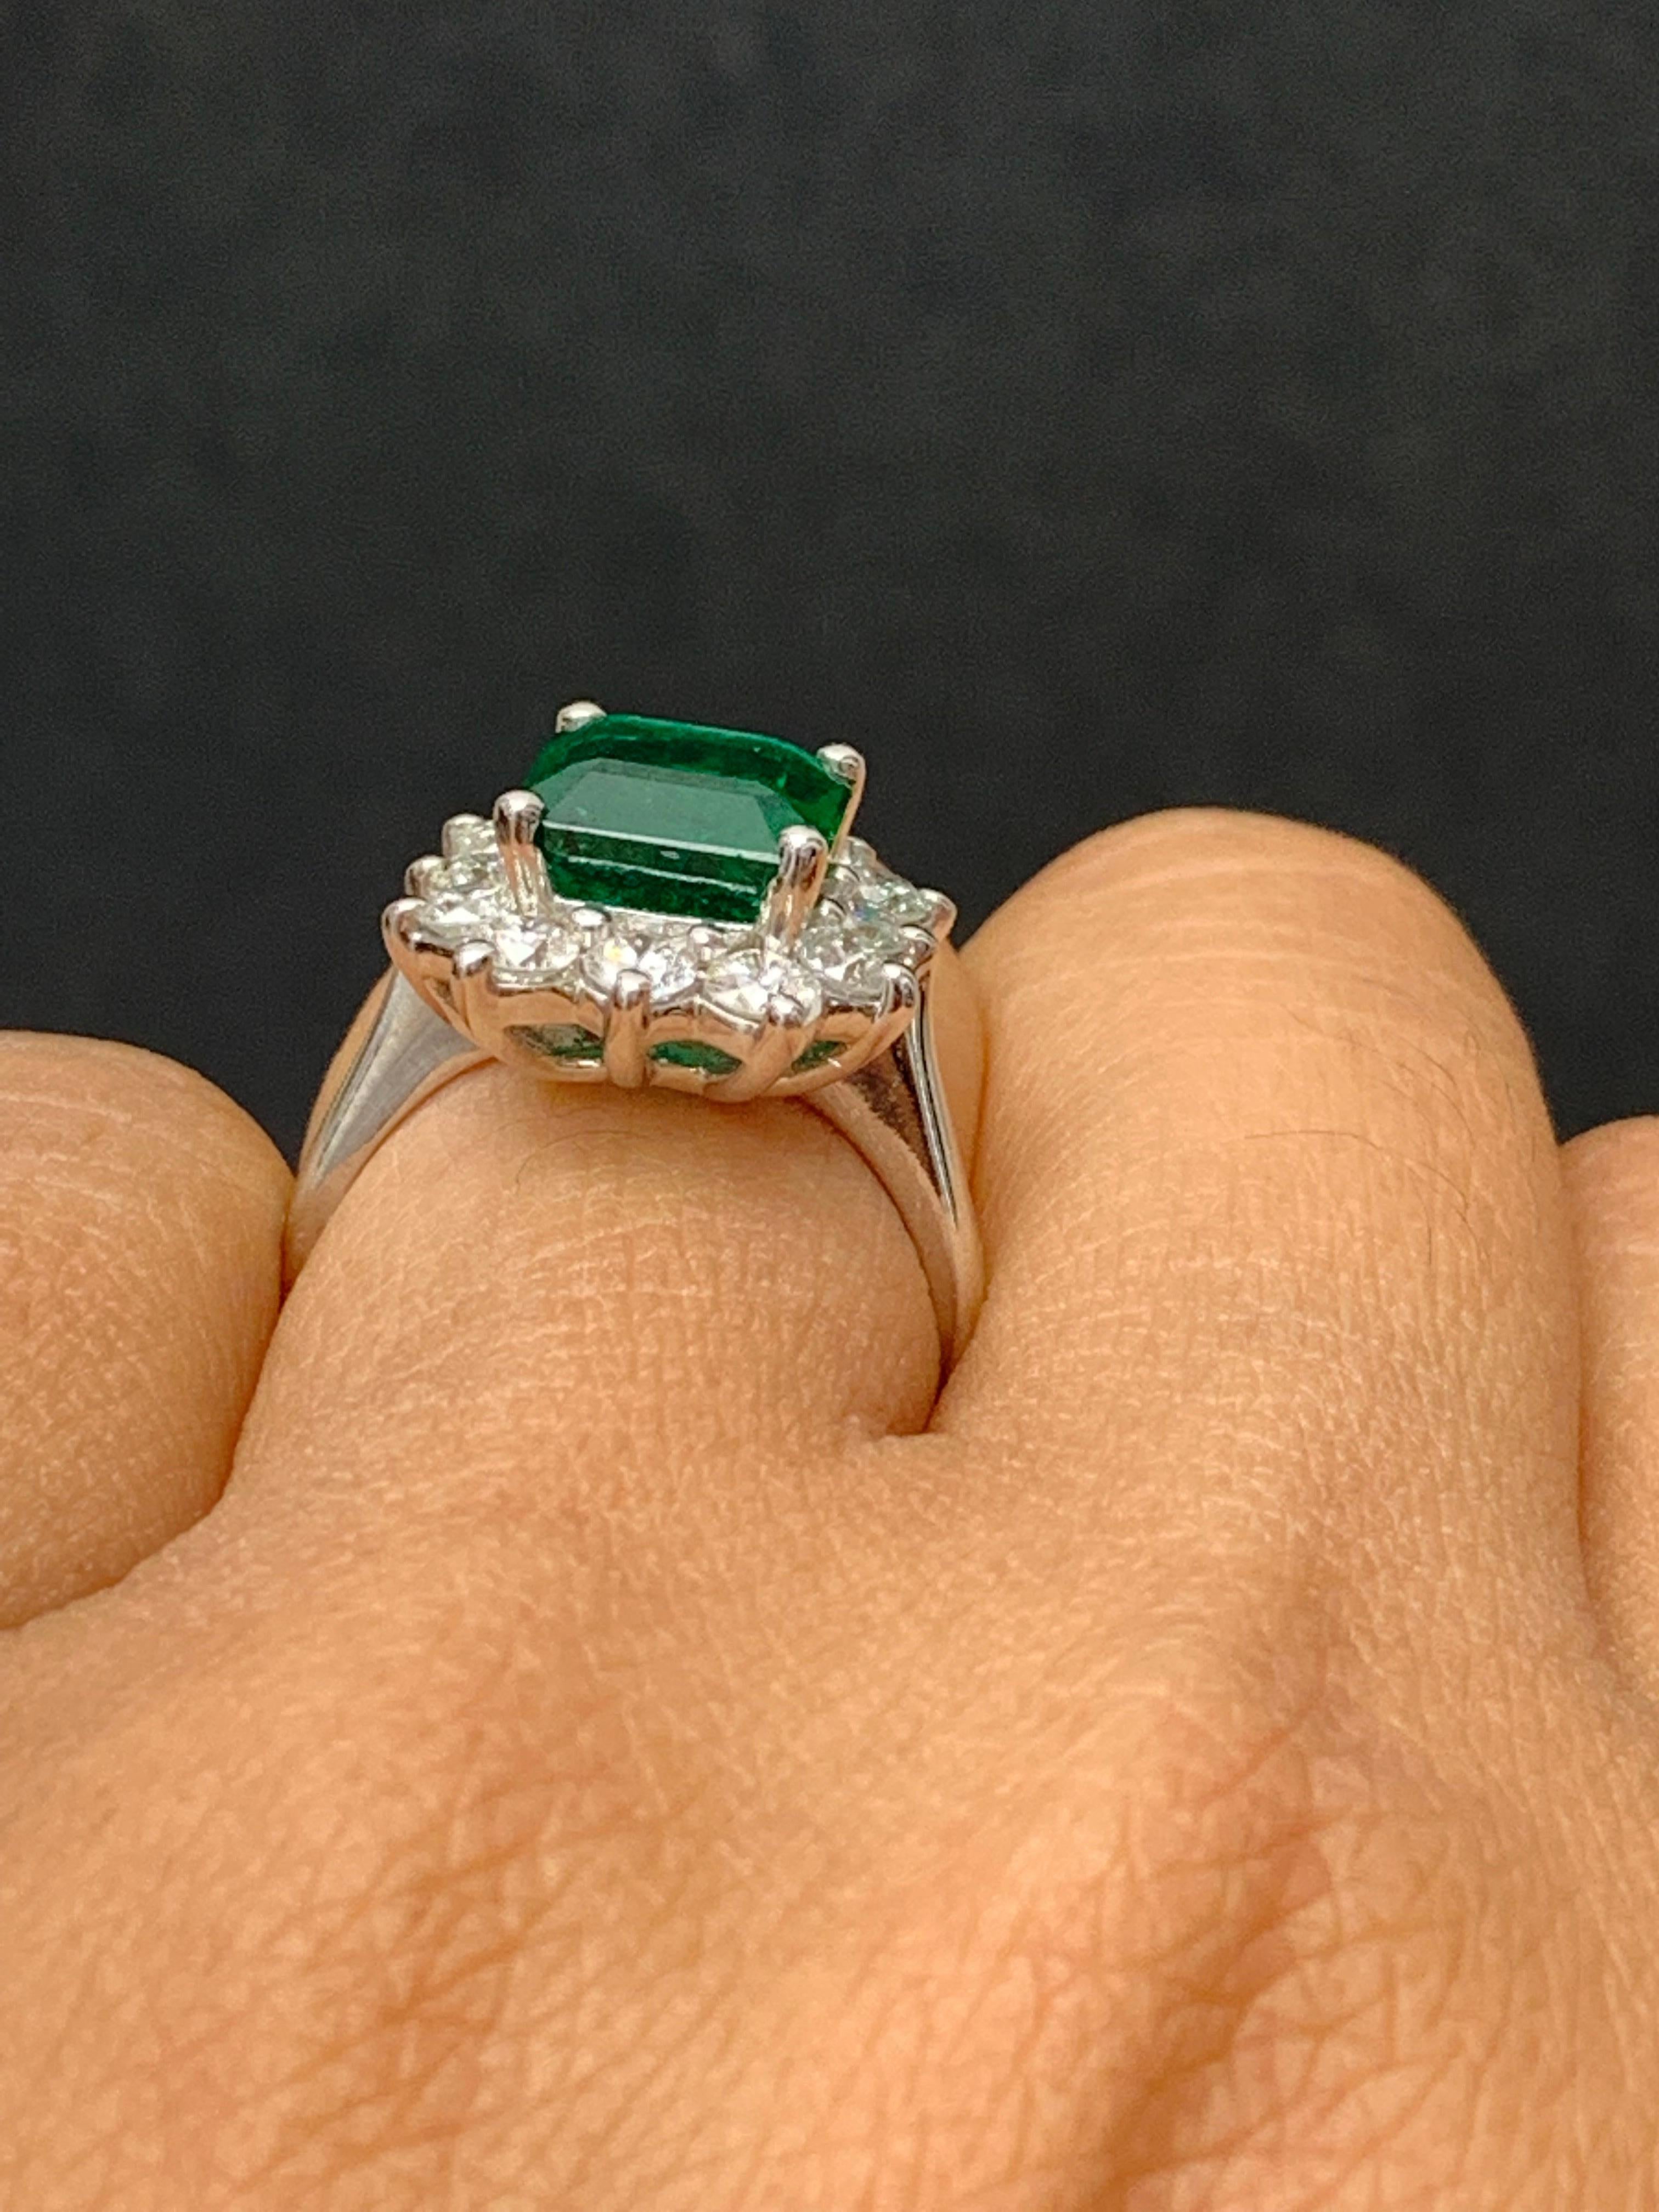 Certified 3.17 Carat Emerald Cut Emerald Diamond Ring in 14K White Gold For Sale 11